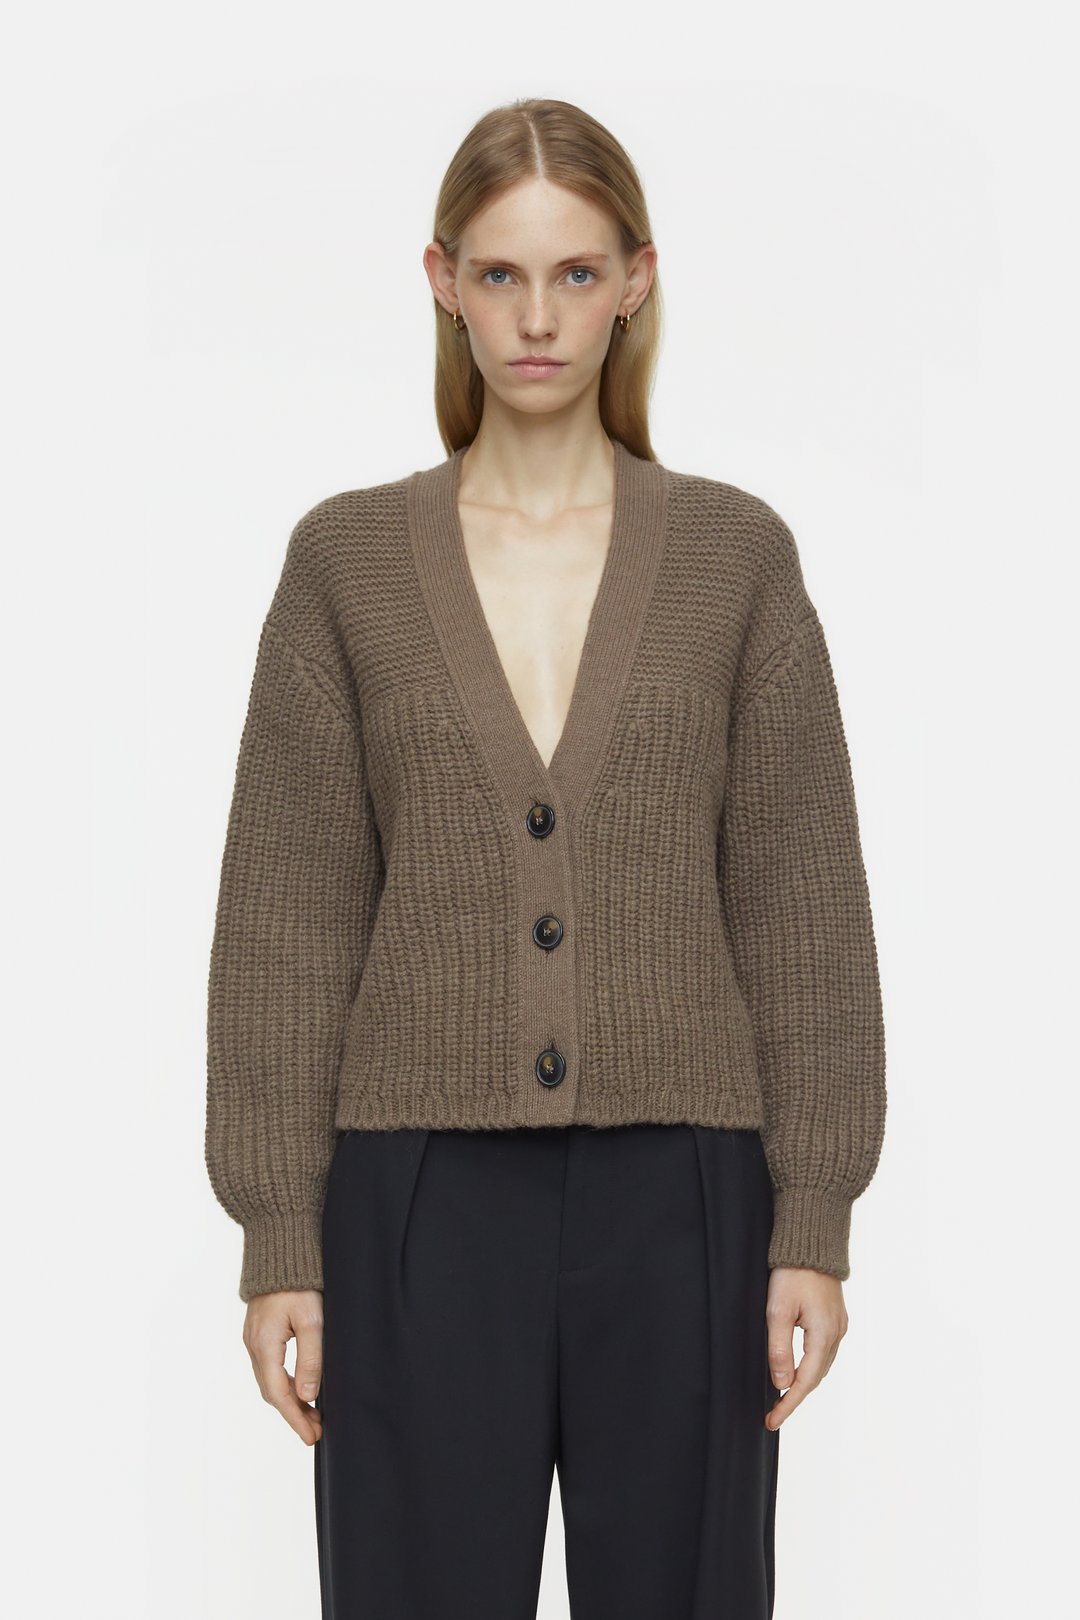 Buy Rosaline Girls Knit Poly Camisole - Grey Melange at Rs.244 online